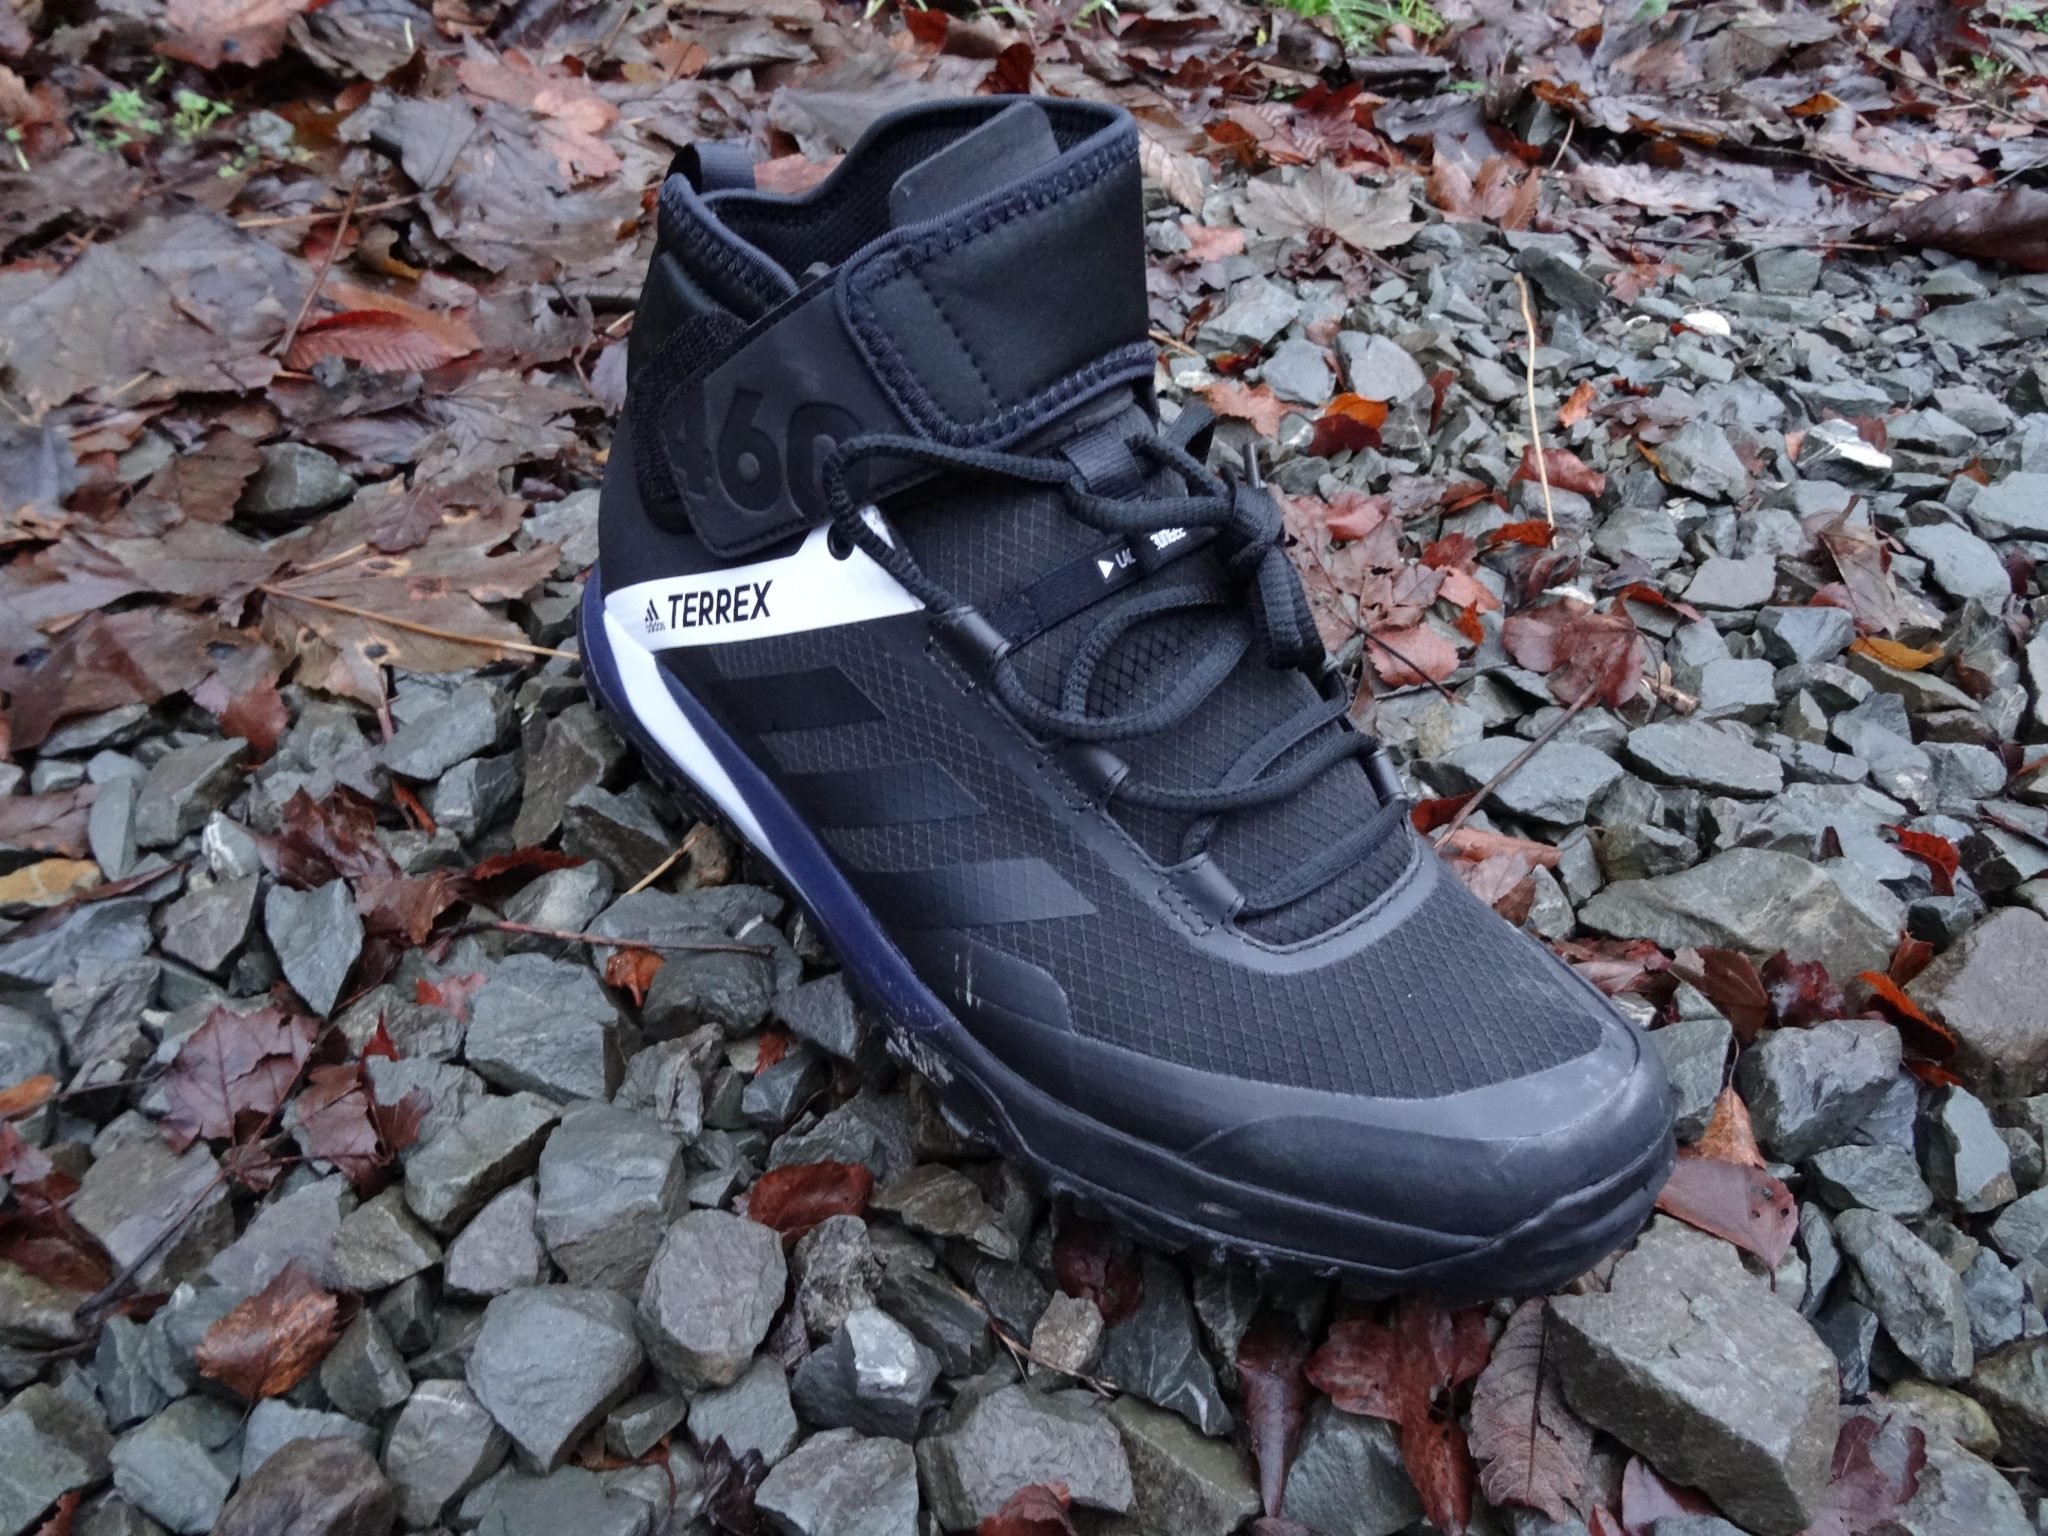 Adidas Terrex Cross Protect | Mountain Bike Reviews » Clothing » Shoes | Free Mountain Bike Magazine